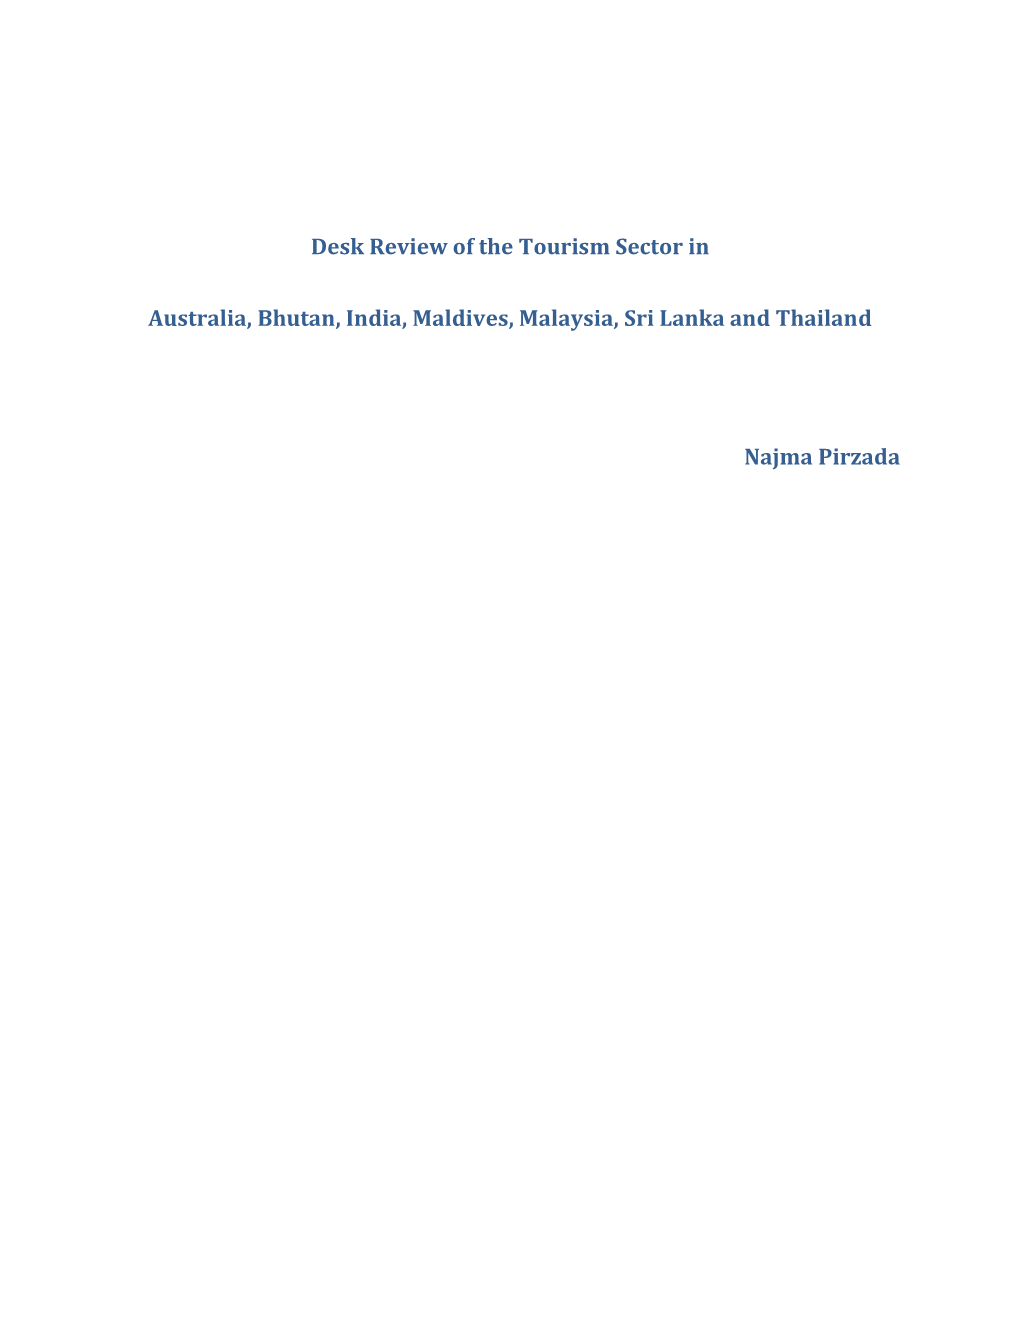 Desk Review of the Tourism Sector in Australia, Bhutan, India, Maldives